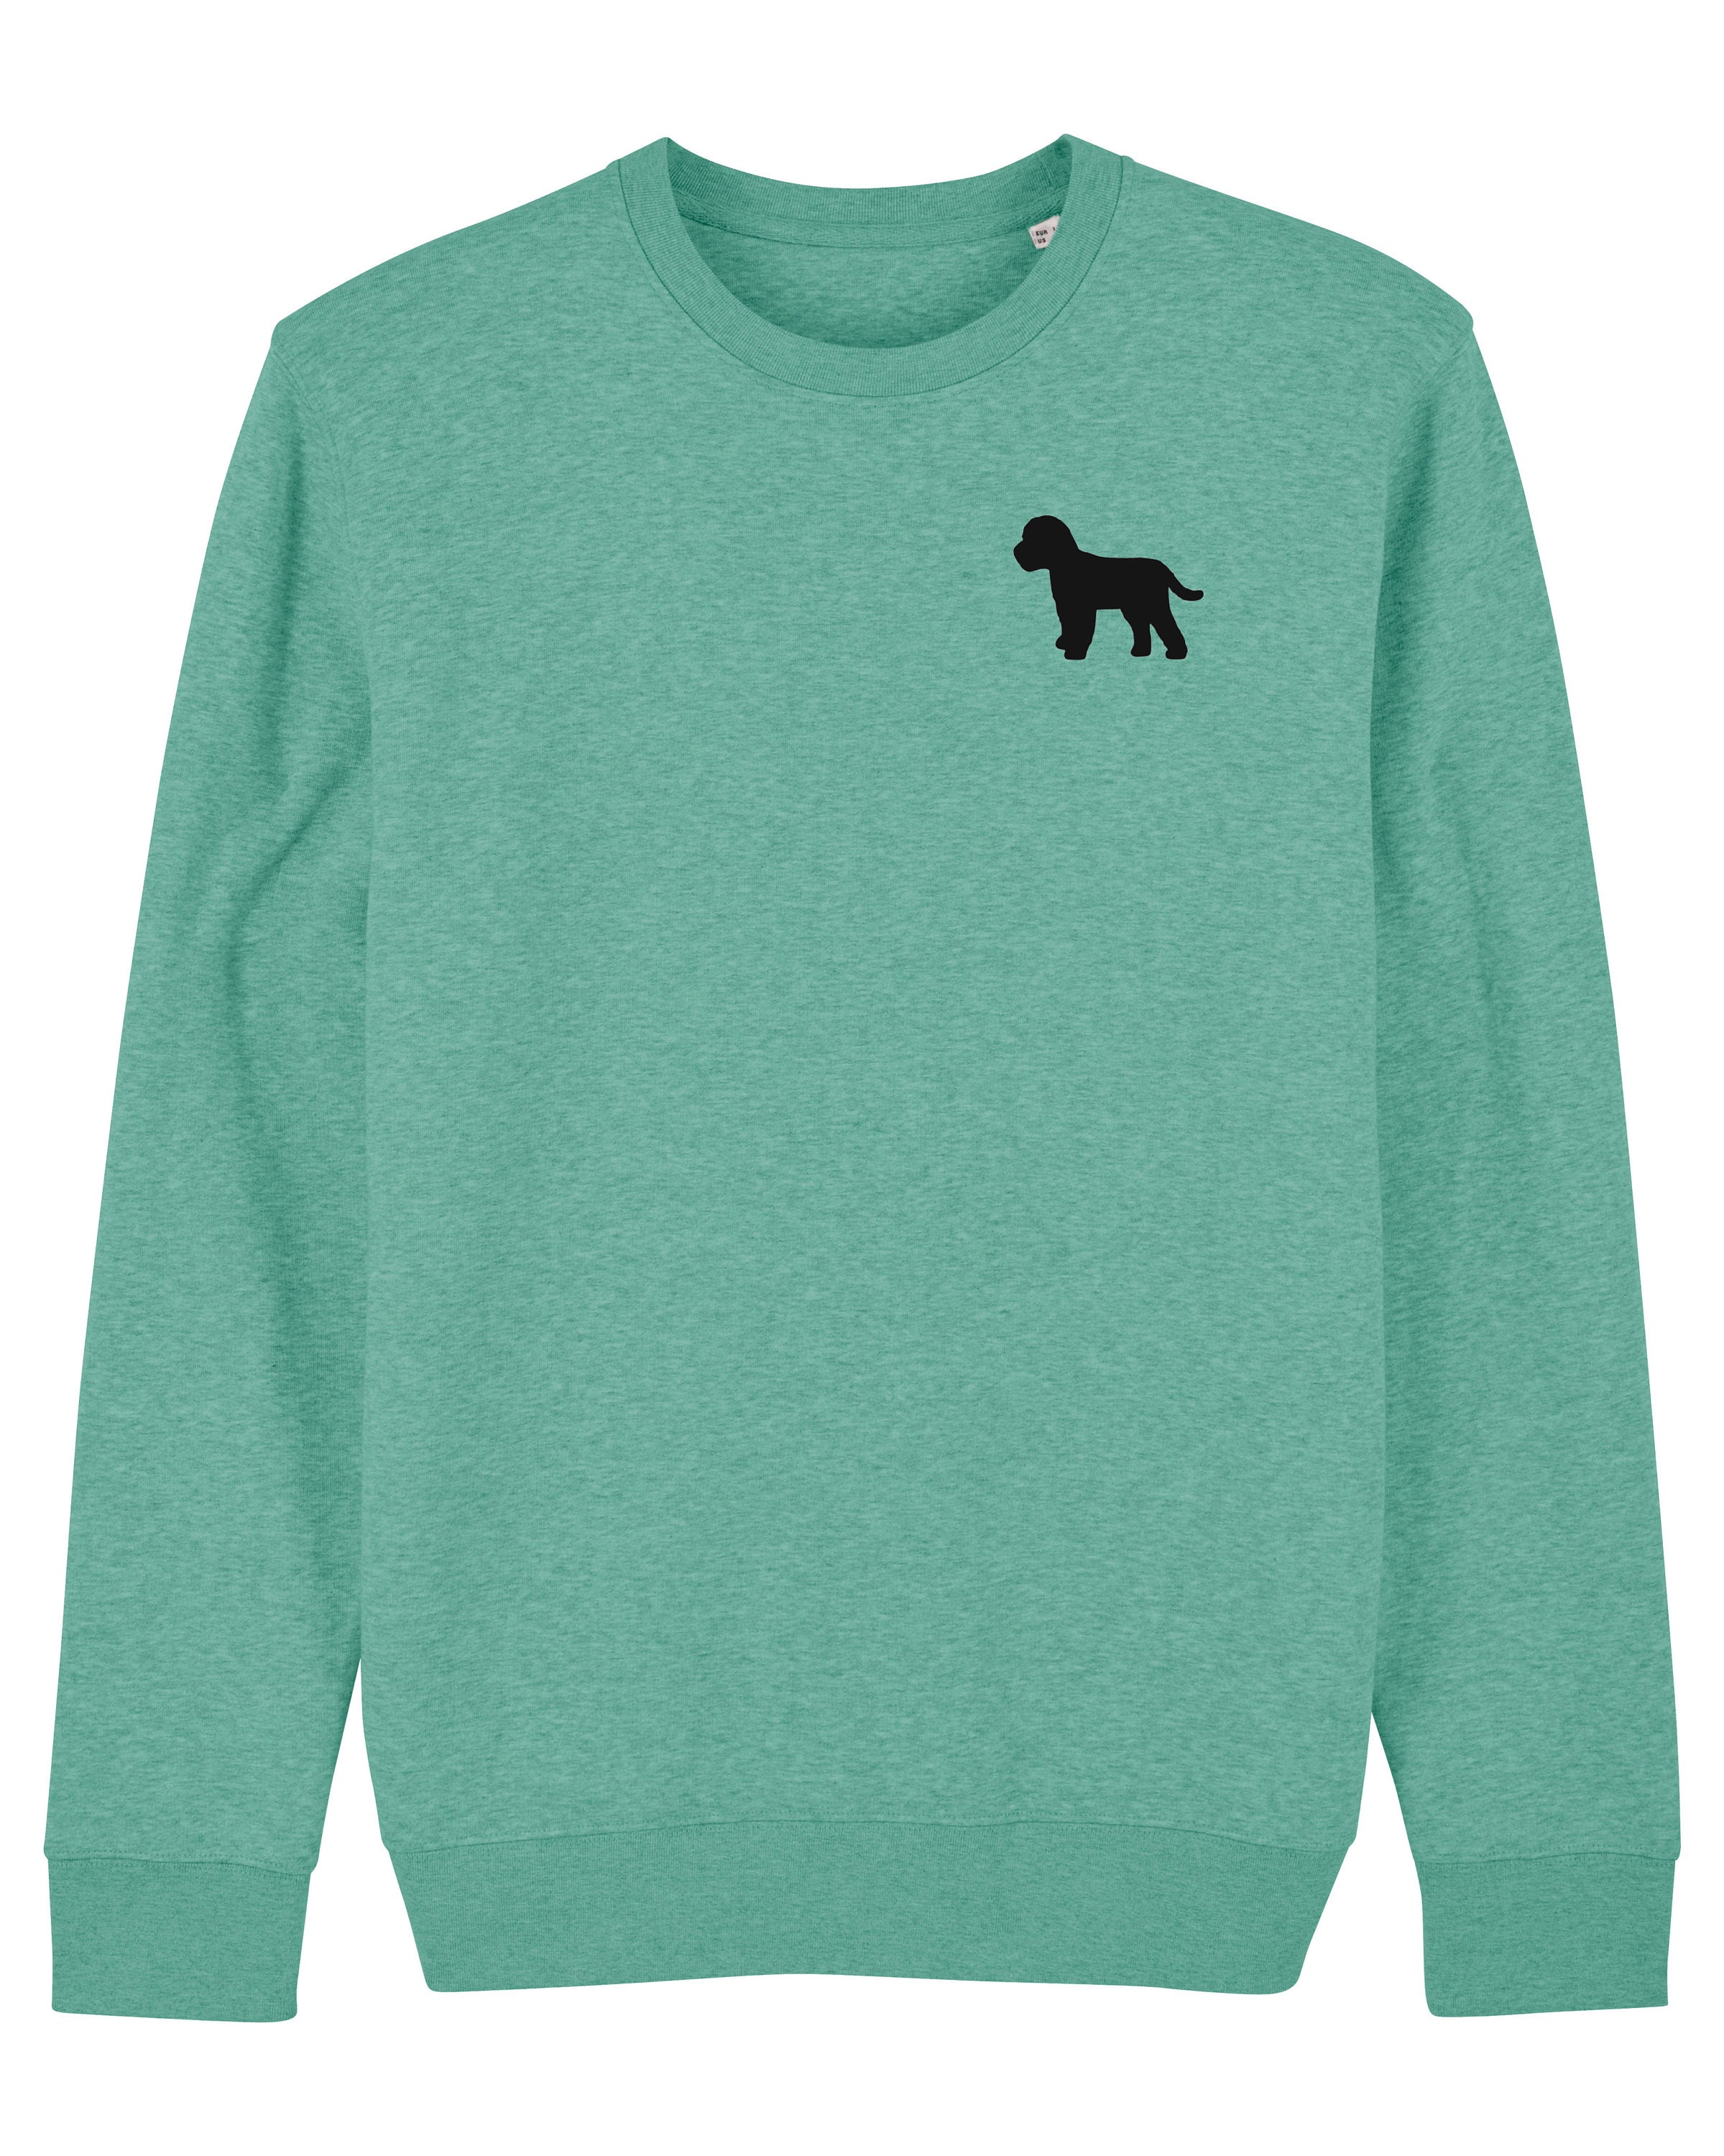 Cockapoo Sweatshirt Soft Organic Sweatshirt | Etsy